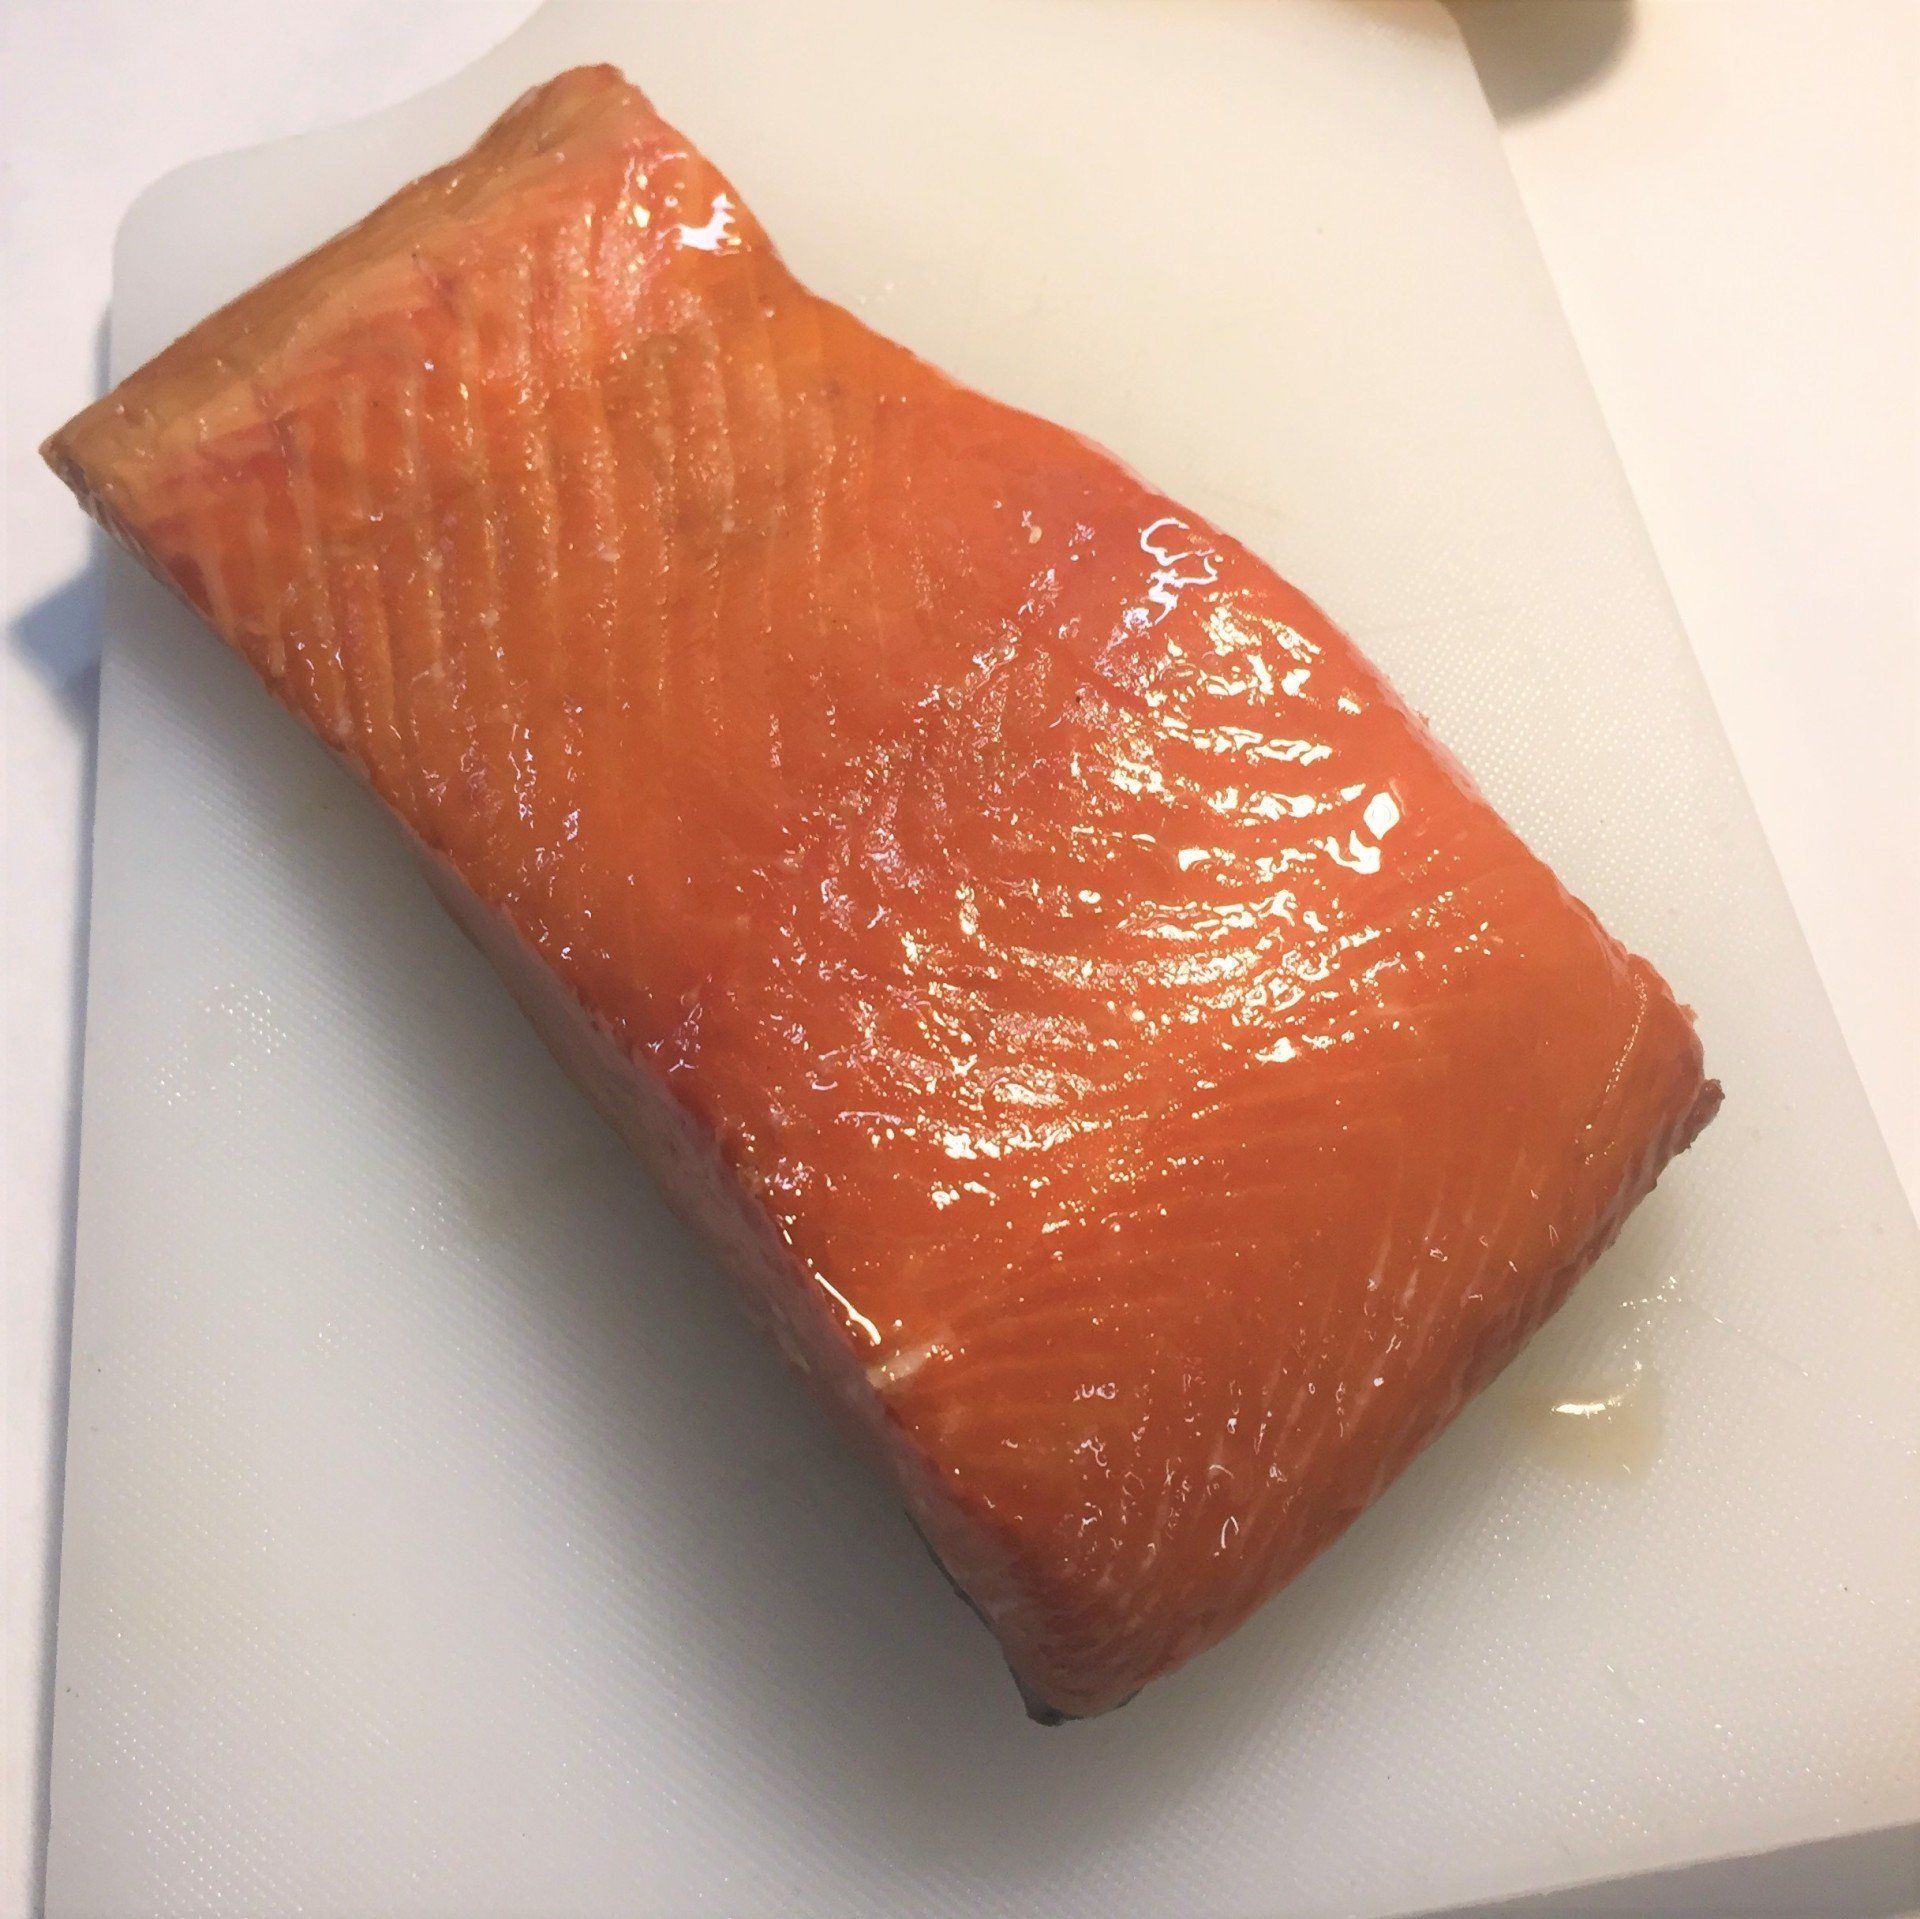 Alder Smoked Salmon